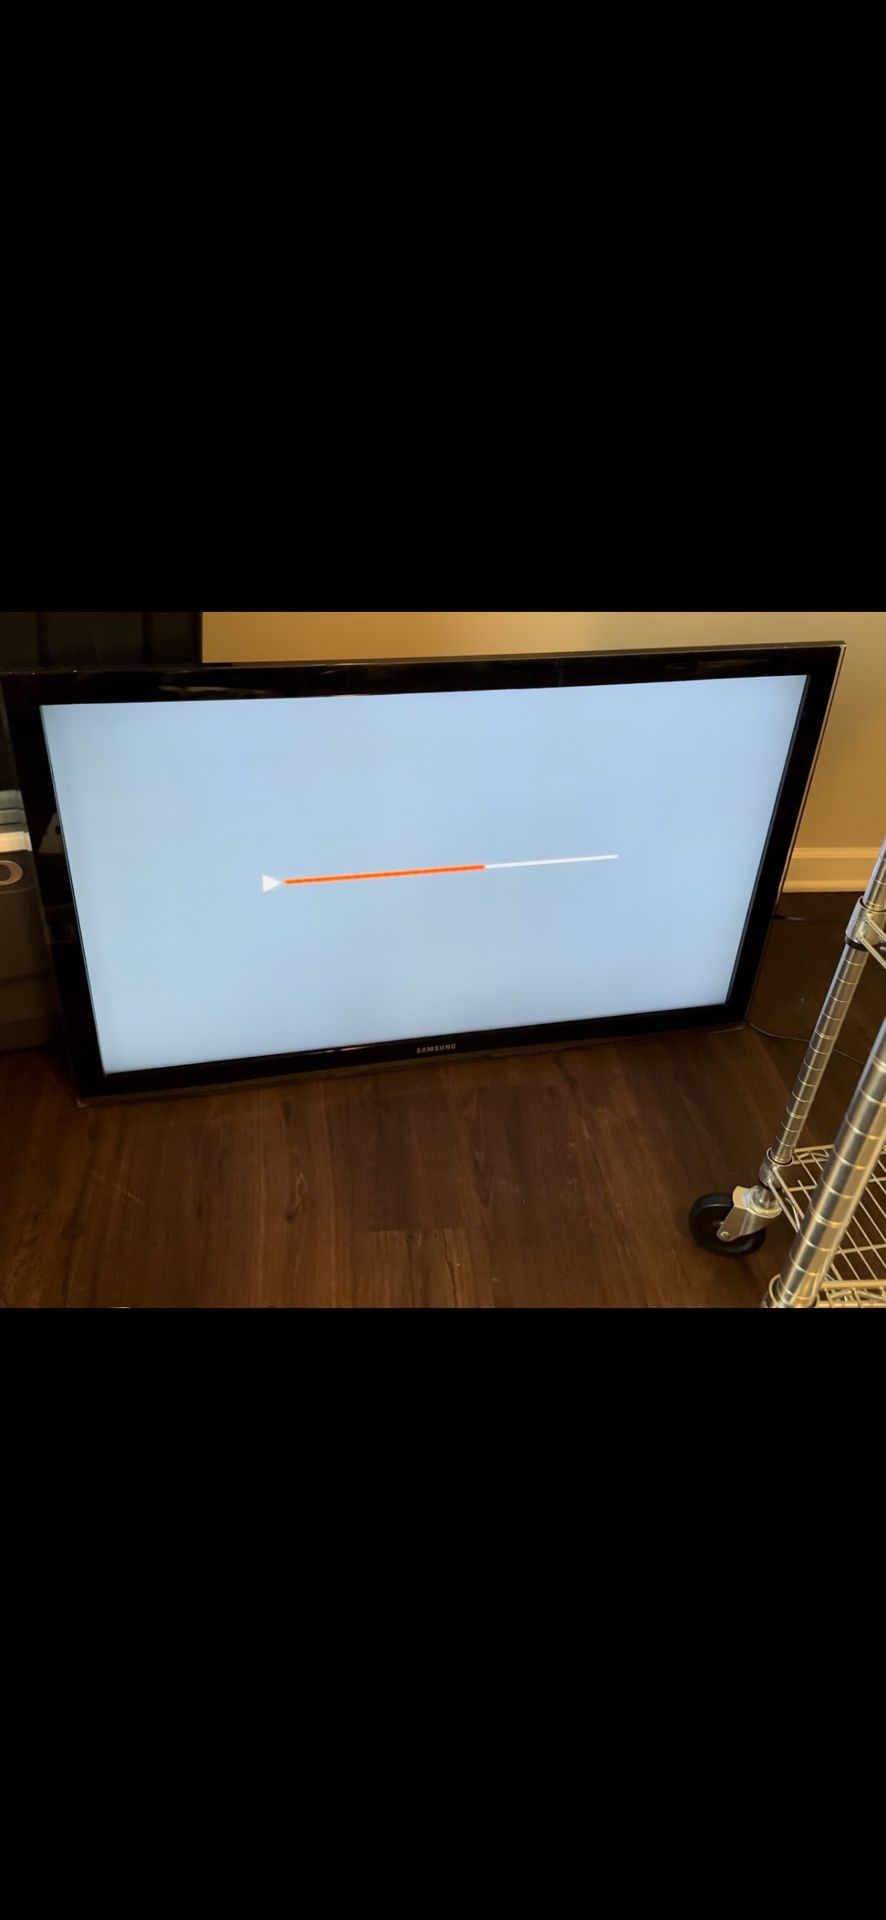 Samsung 46” TV, Apple TV, Wall mount For TV. 